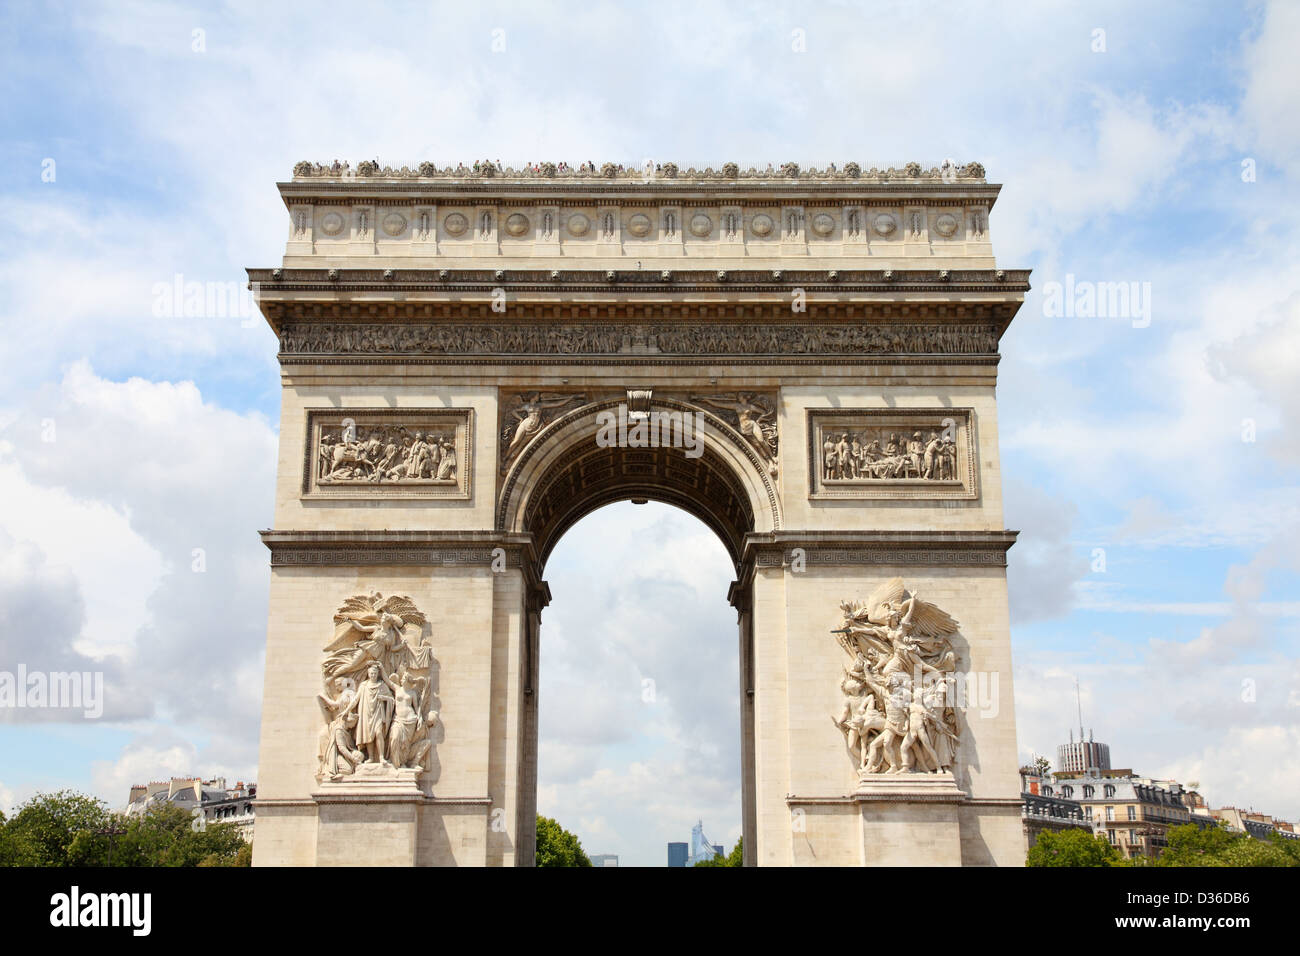 Paris, France - famous Triumphal Arch (Arc de Triomphe) located at the end of Champs-Elysees street. UNESCO World Heritage Site. Stock Photo